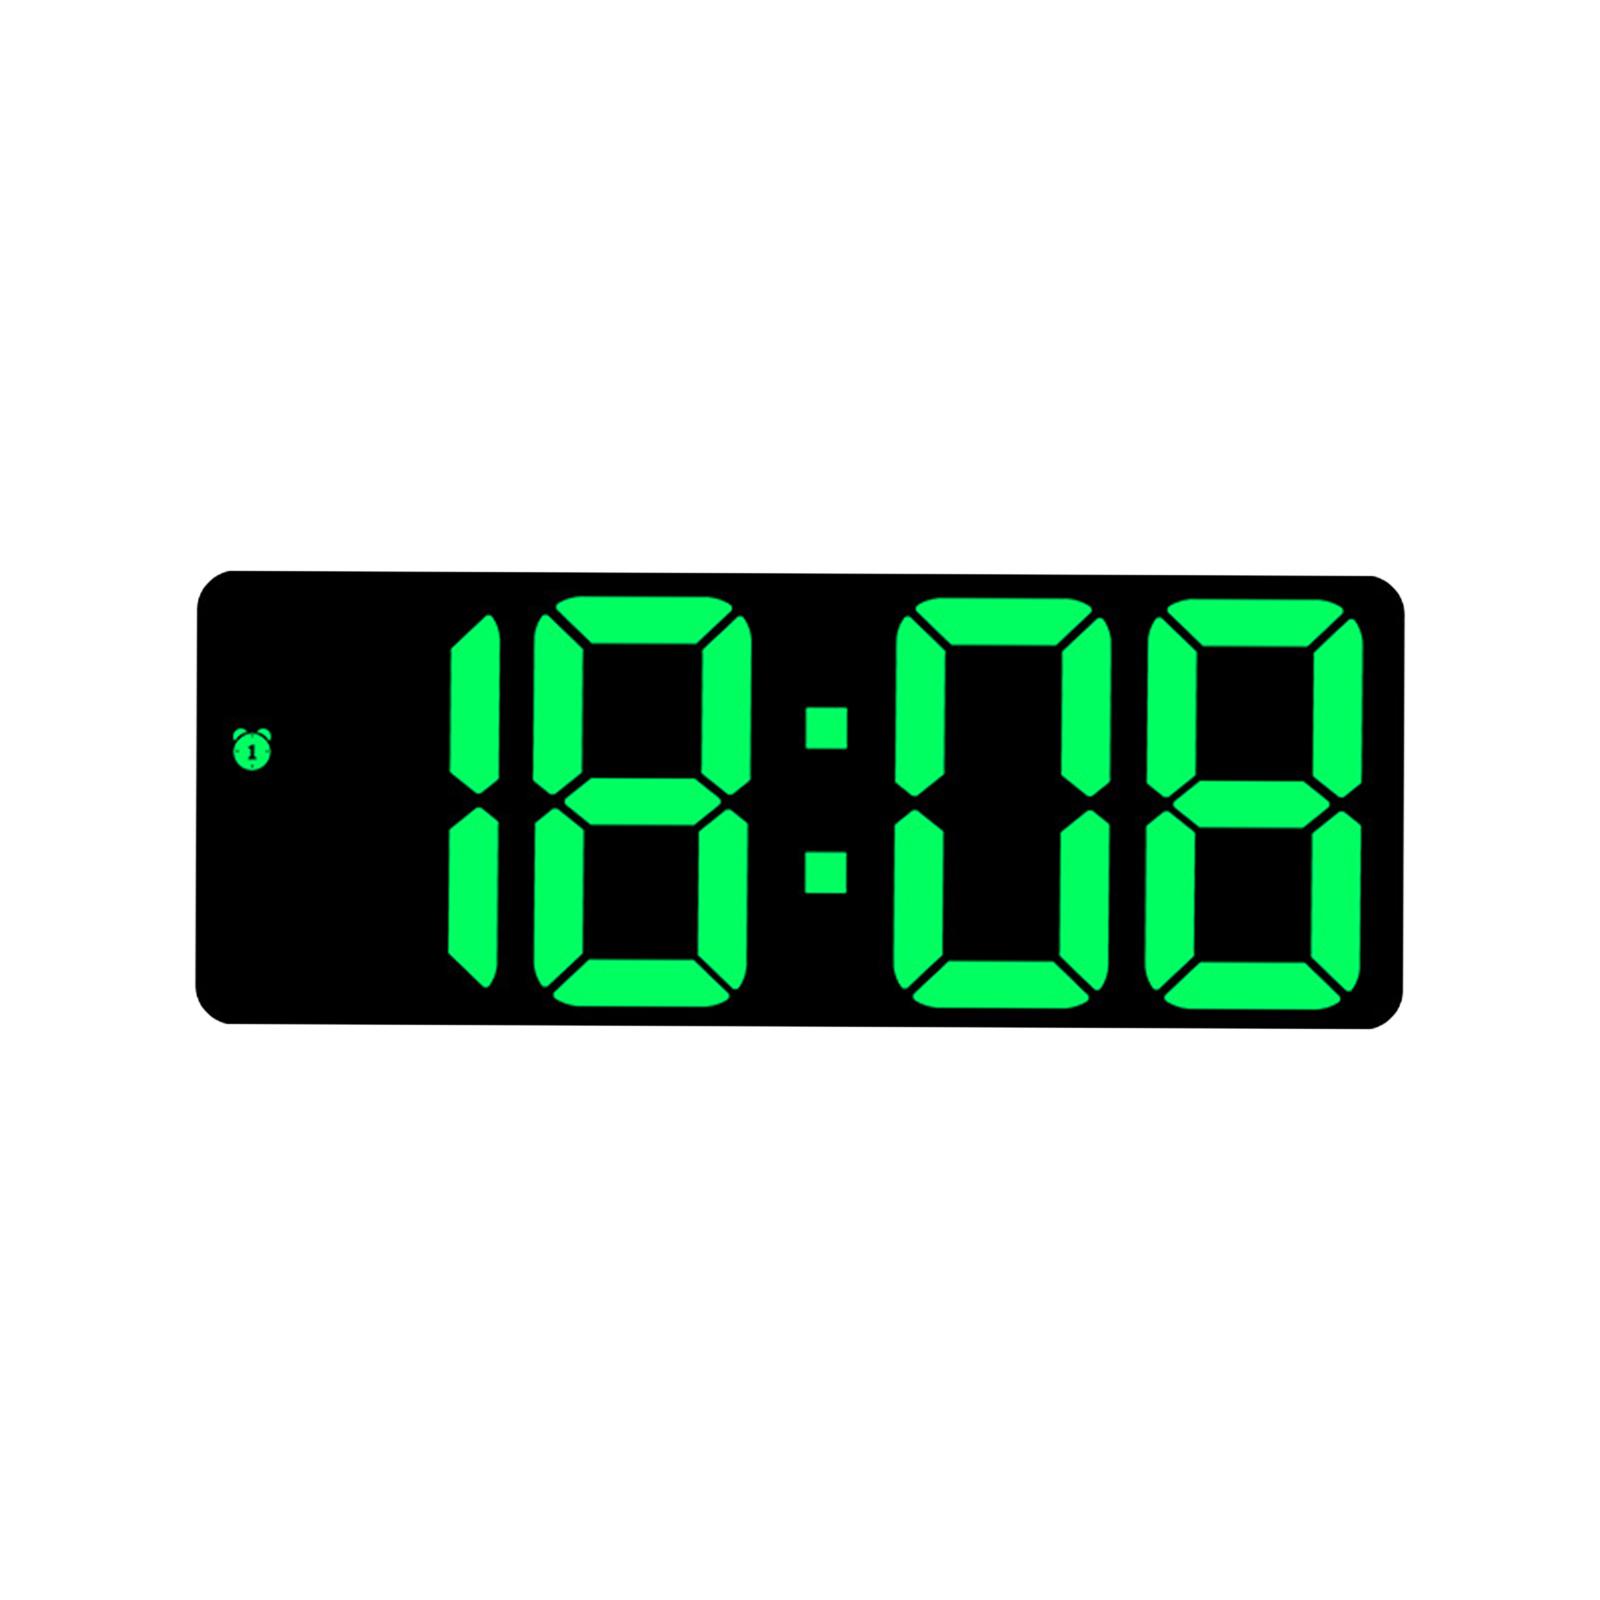 Digital Wall Clock Desk LED Desktop Alarm Clock for Living Room Adult Office Green